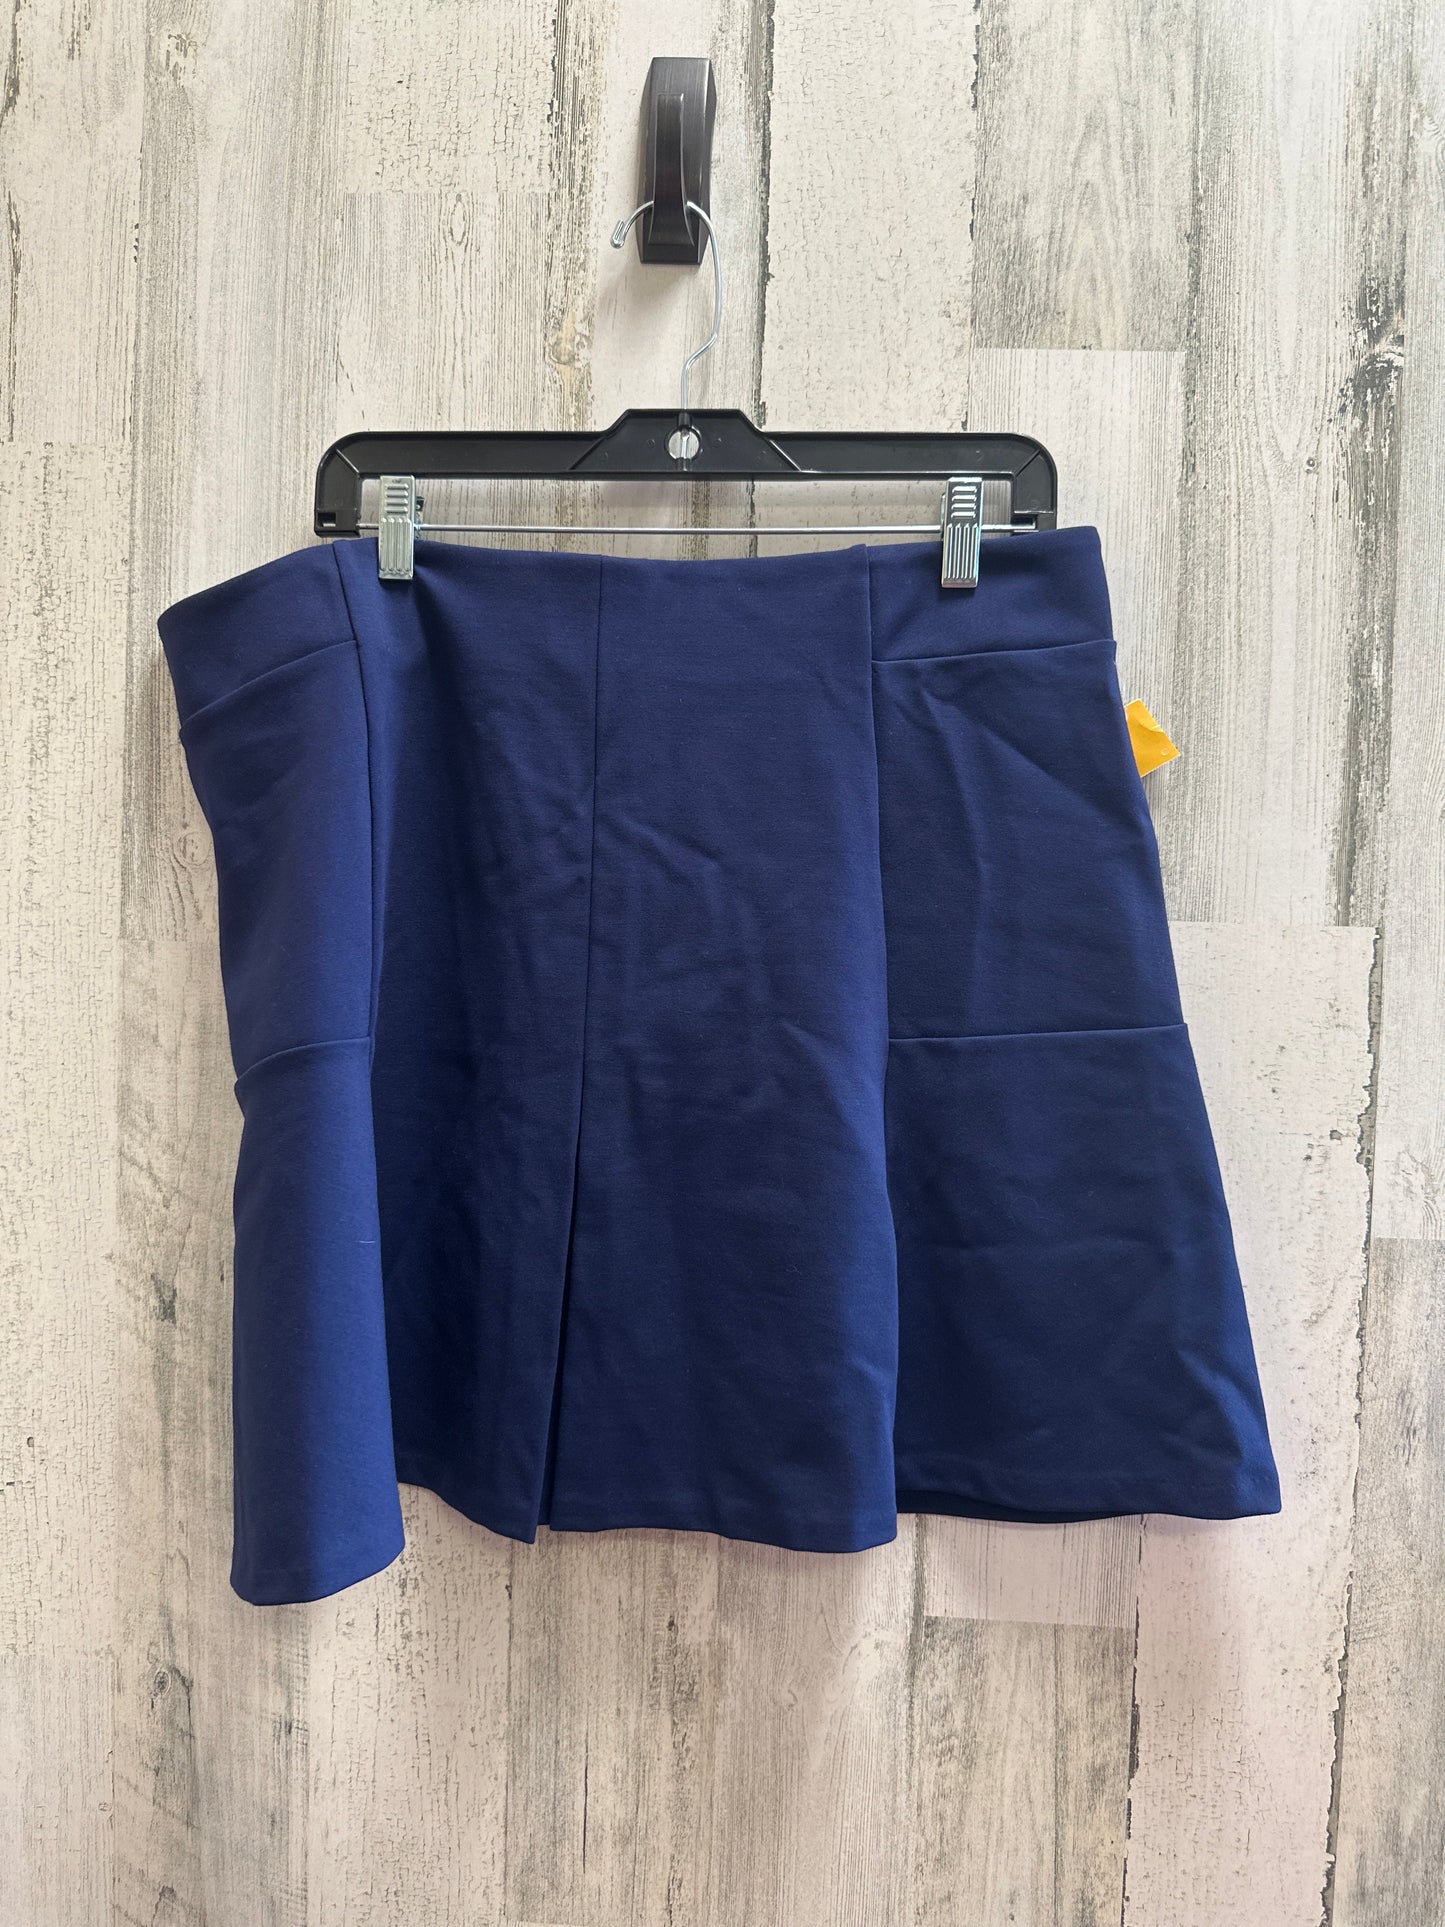 Skirt Midi By Vineyard Vines  Size: Xl